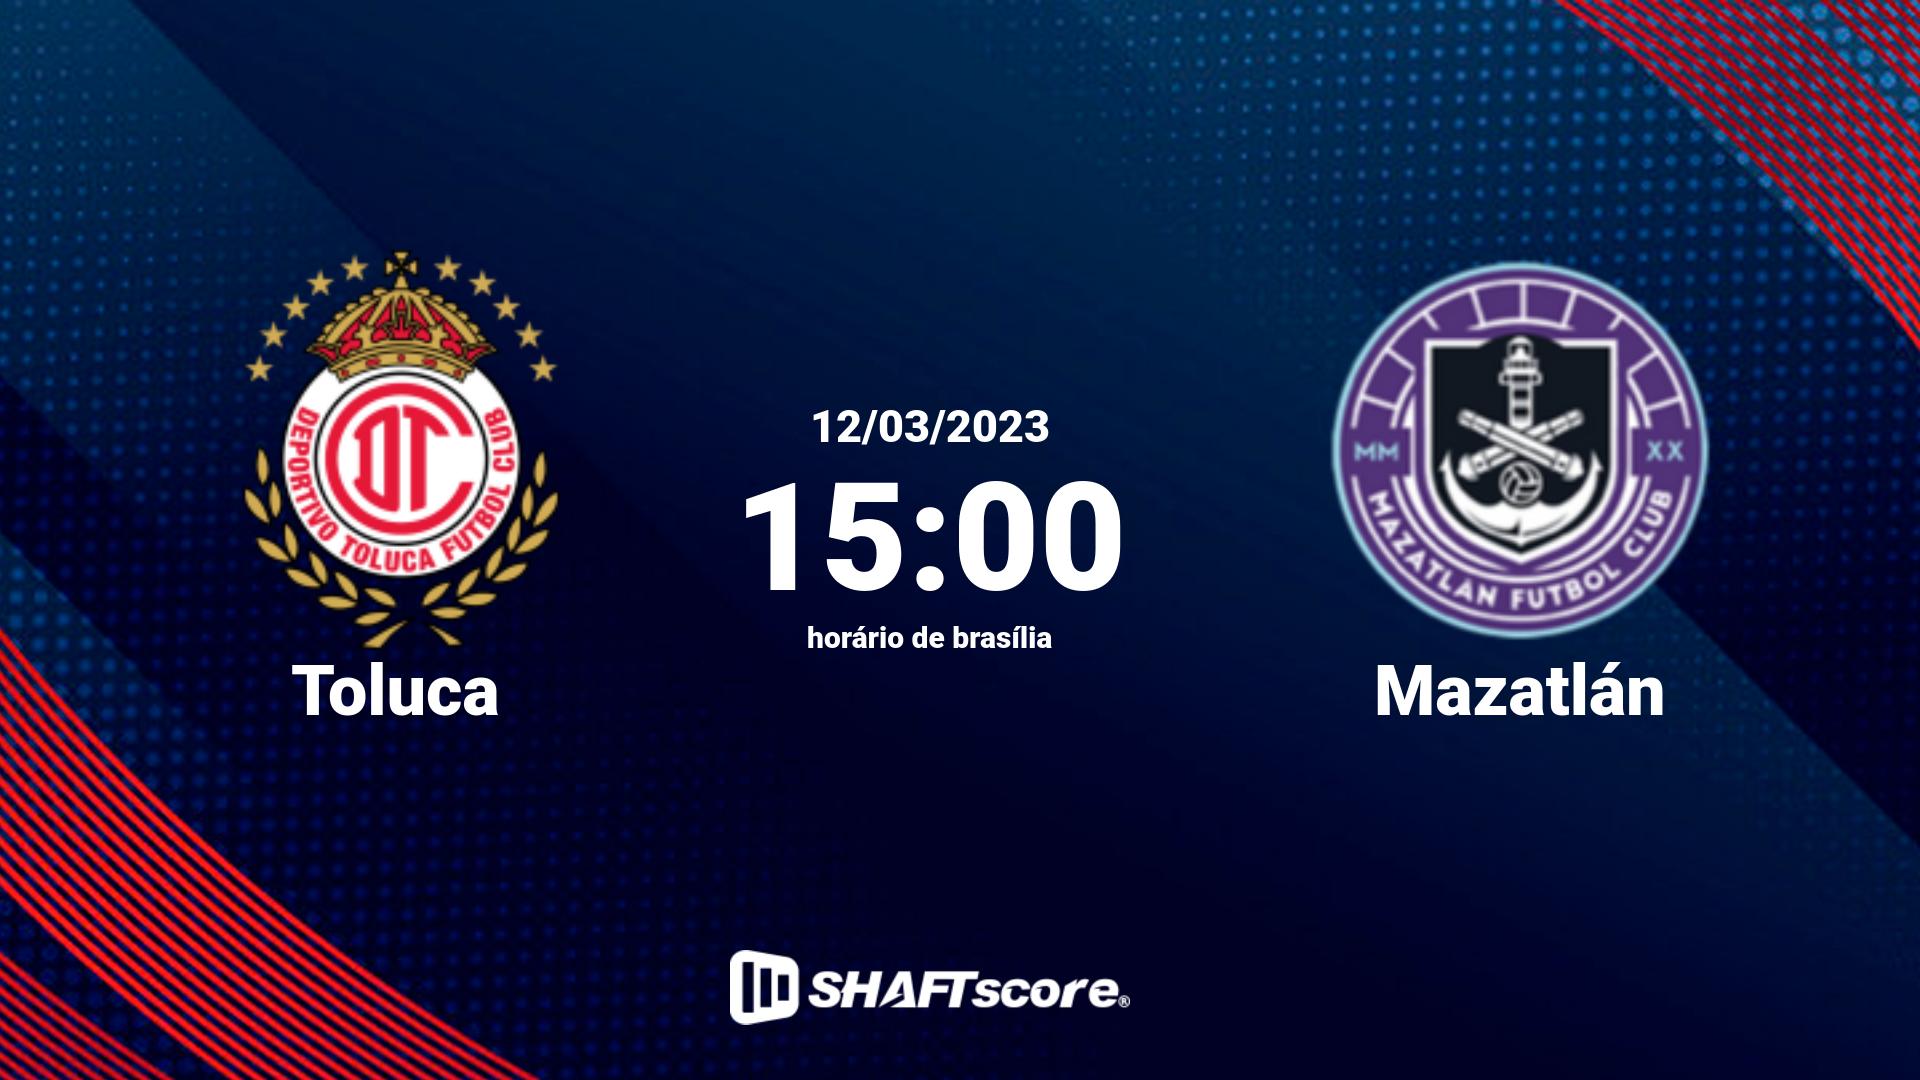 Estatísticas do jogo Toluca vs Mazatlán 12.03 15:00